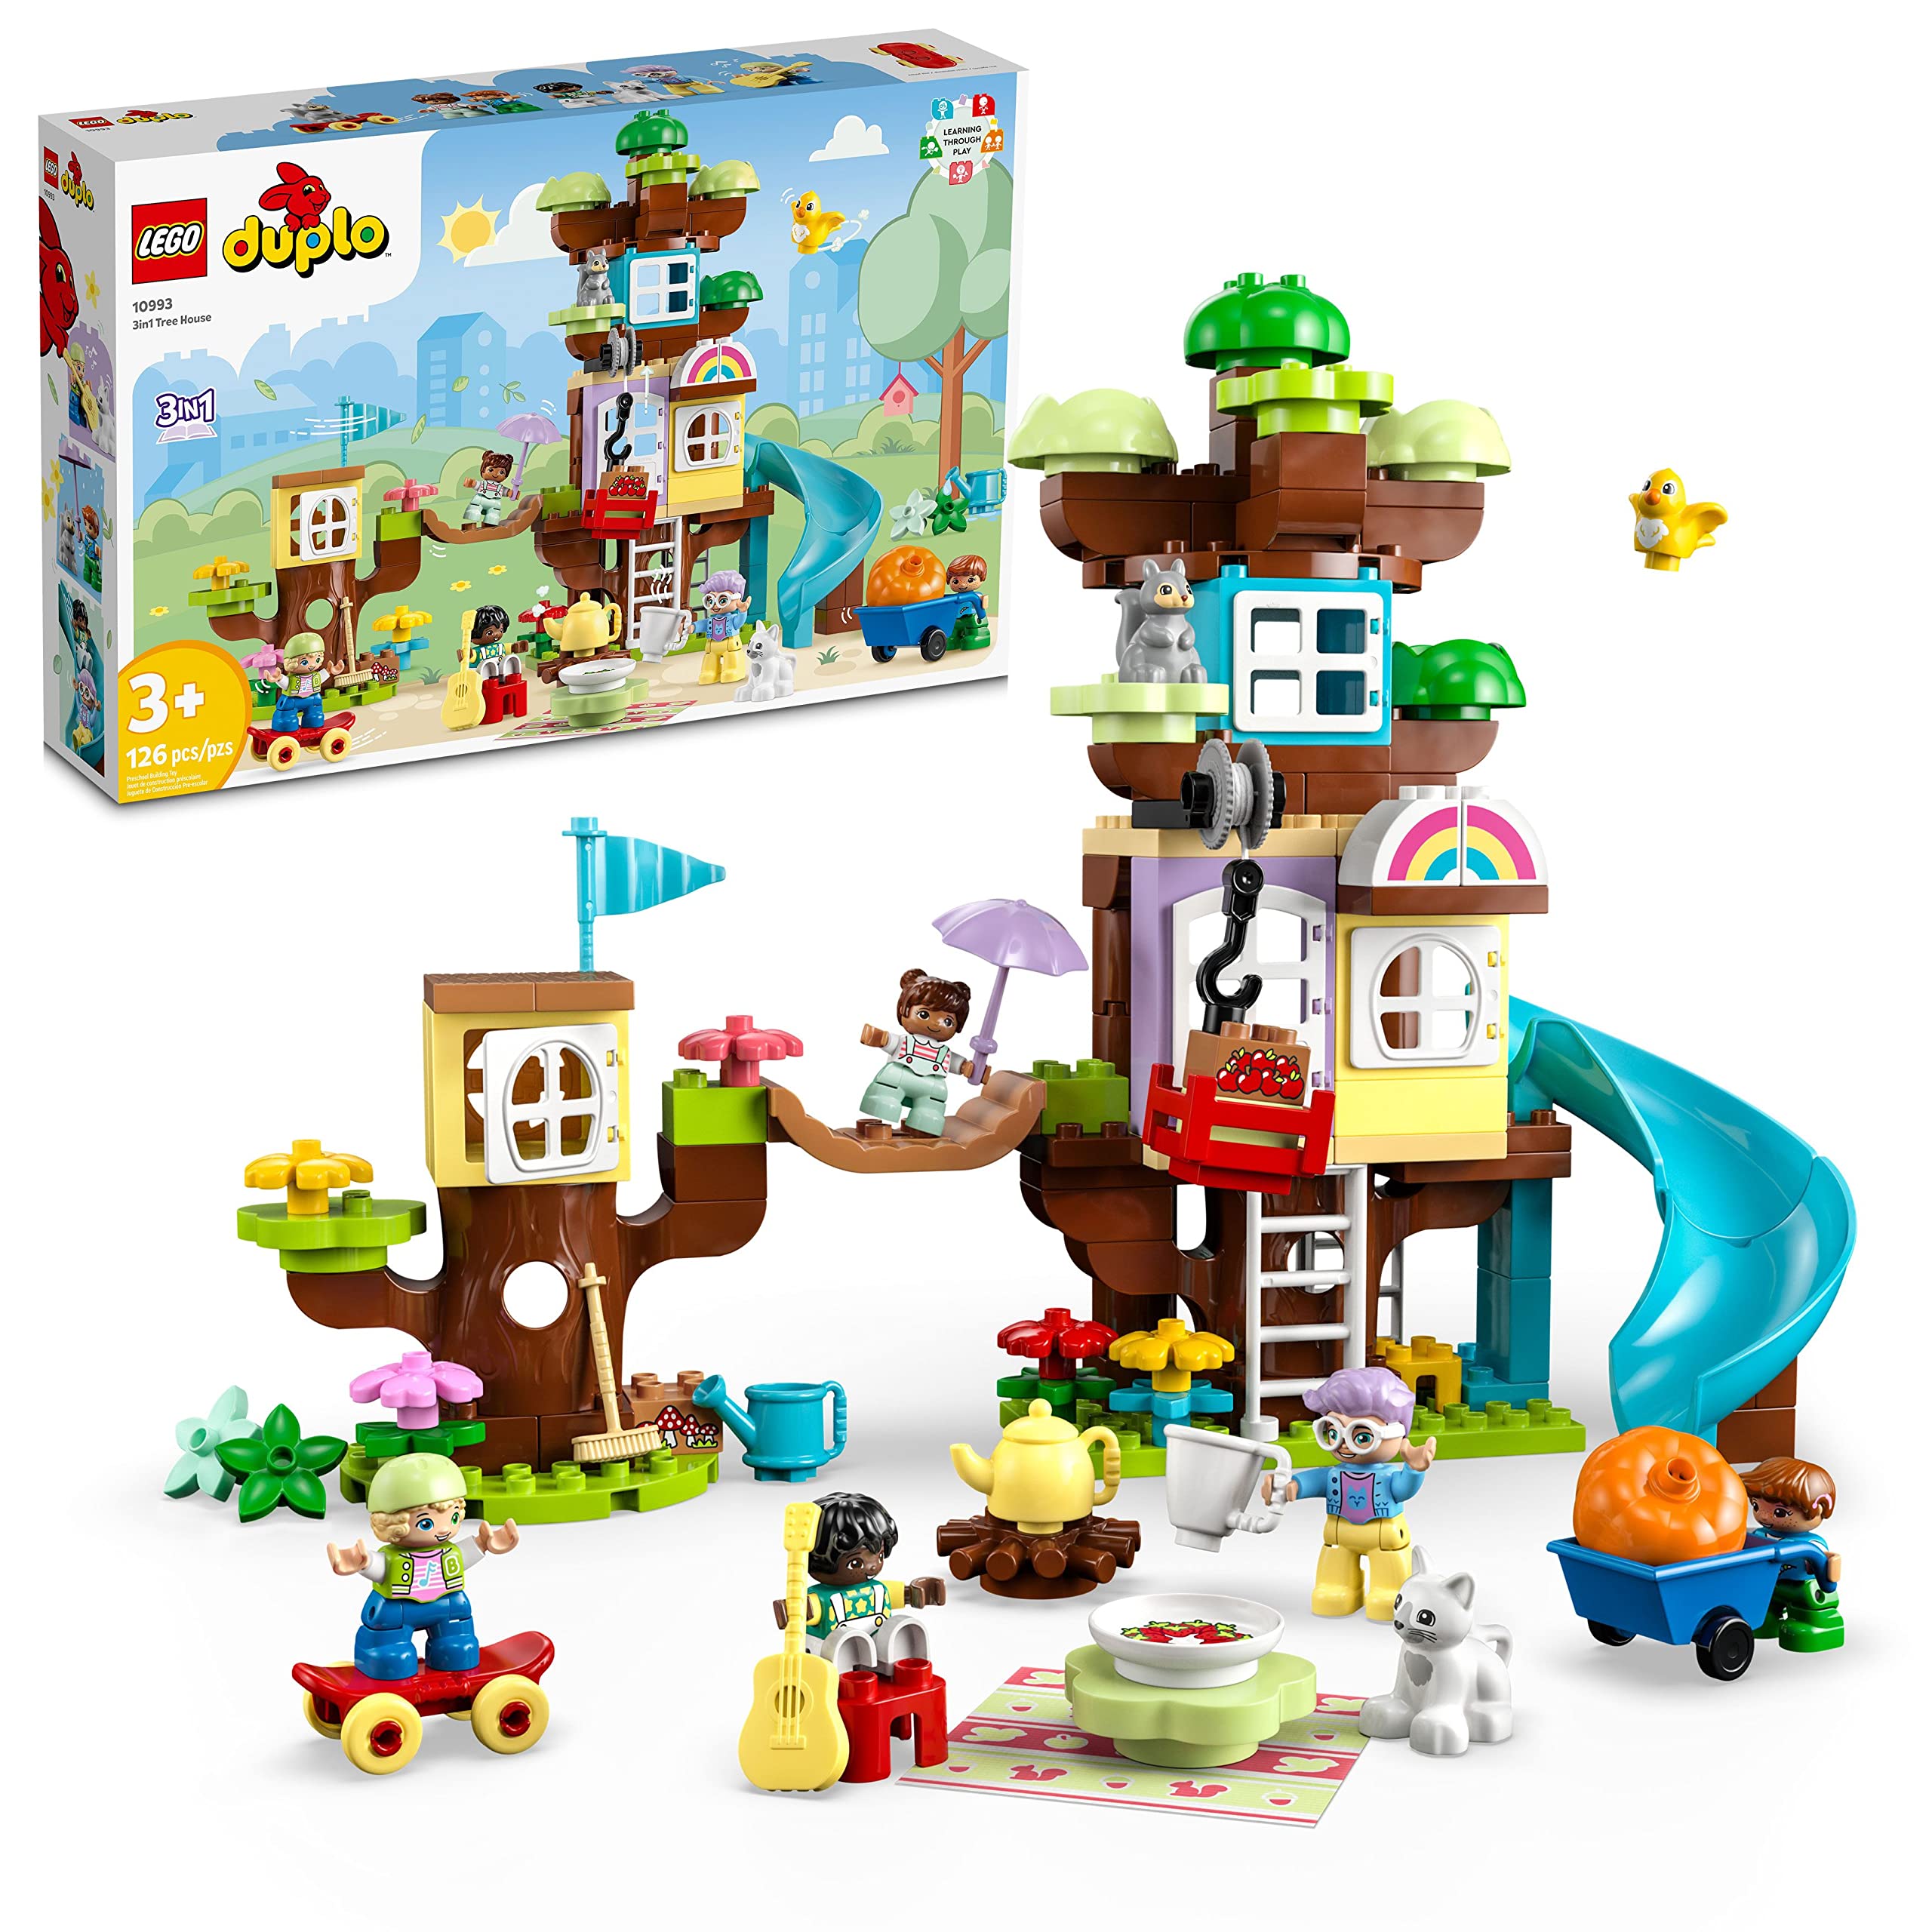 126-Piece LEGO DUPLO 3in1 Tree House Building Set + $15 Walmart Cash $72 + Free Shipping